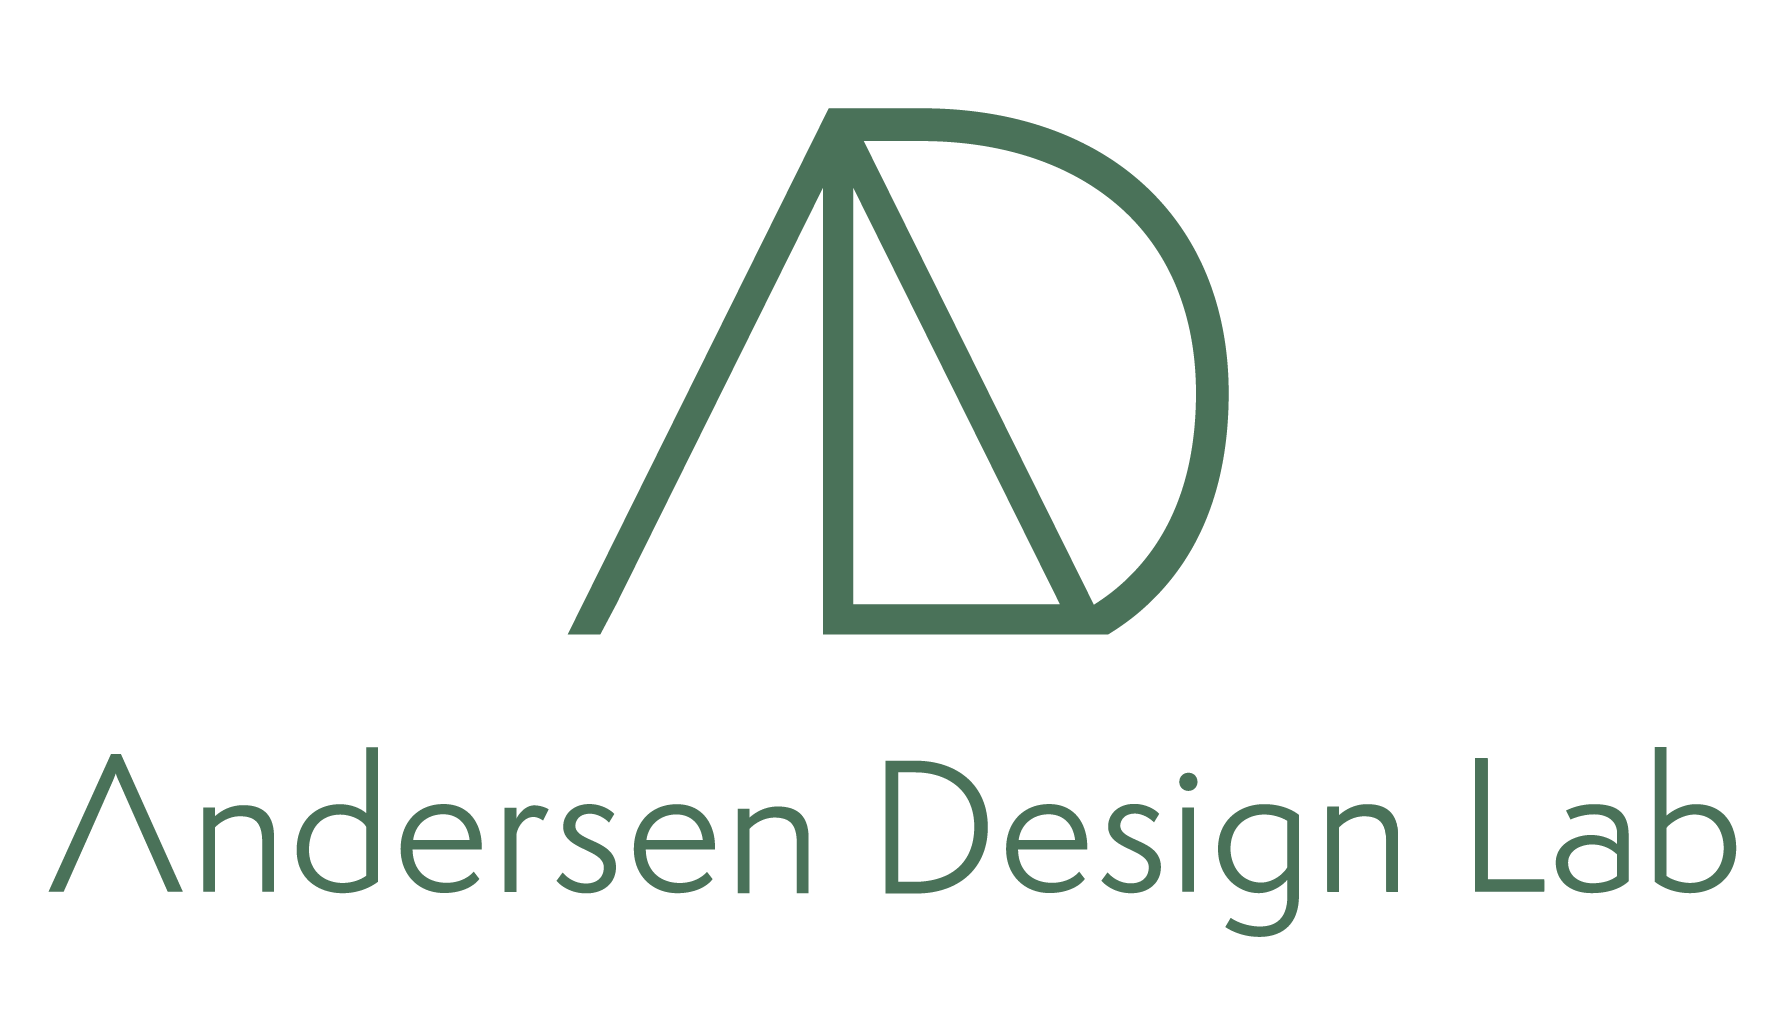 Om Andersen Design Lab - Andersen Design Lab